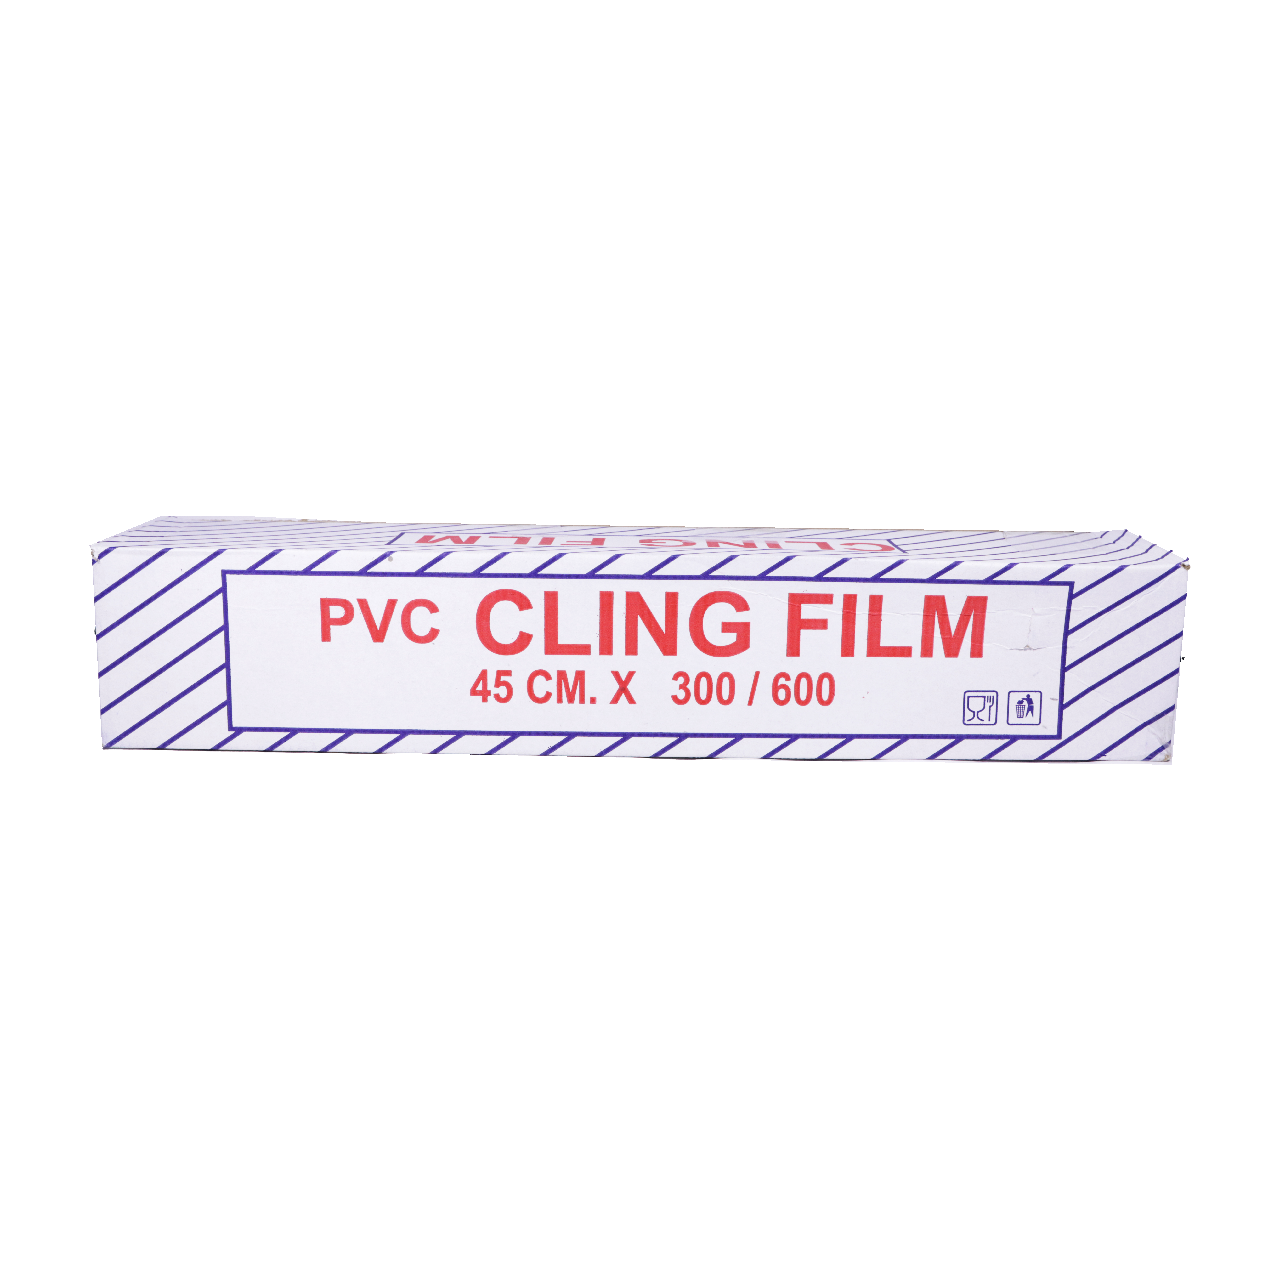 Cling Film PVC 45CM